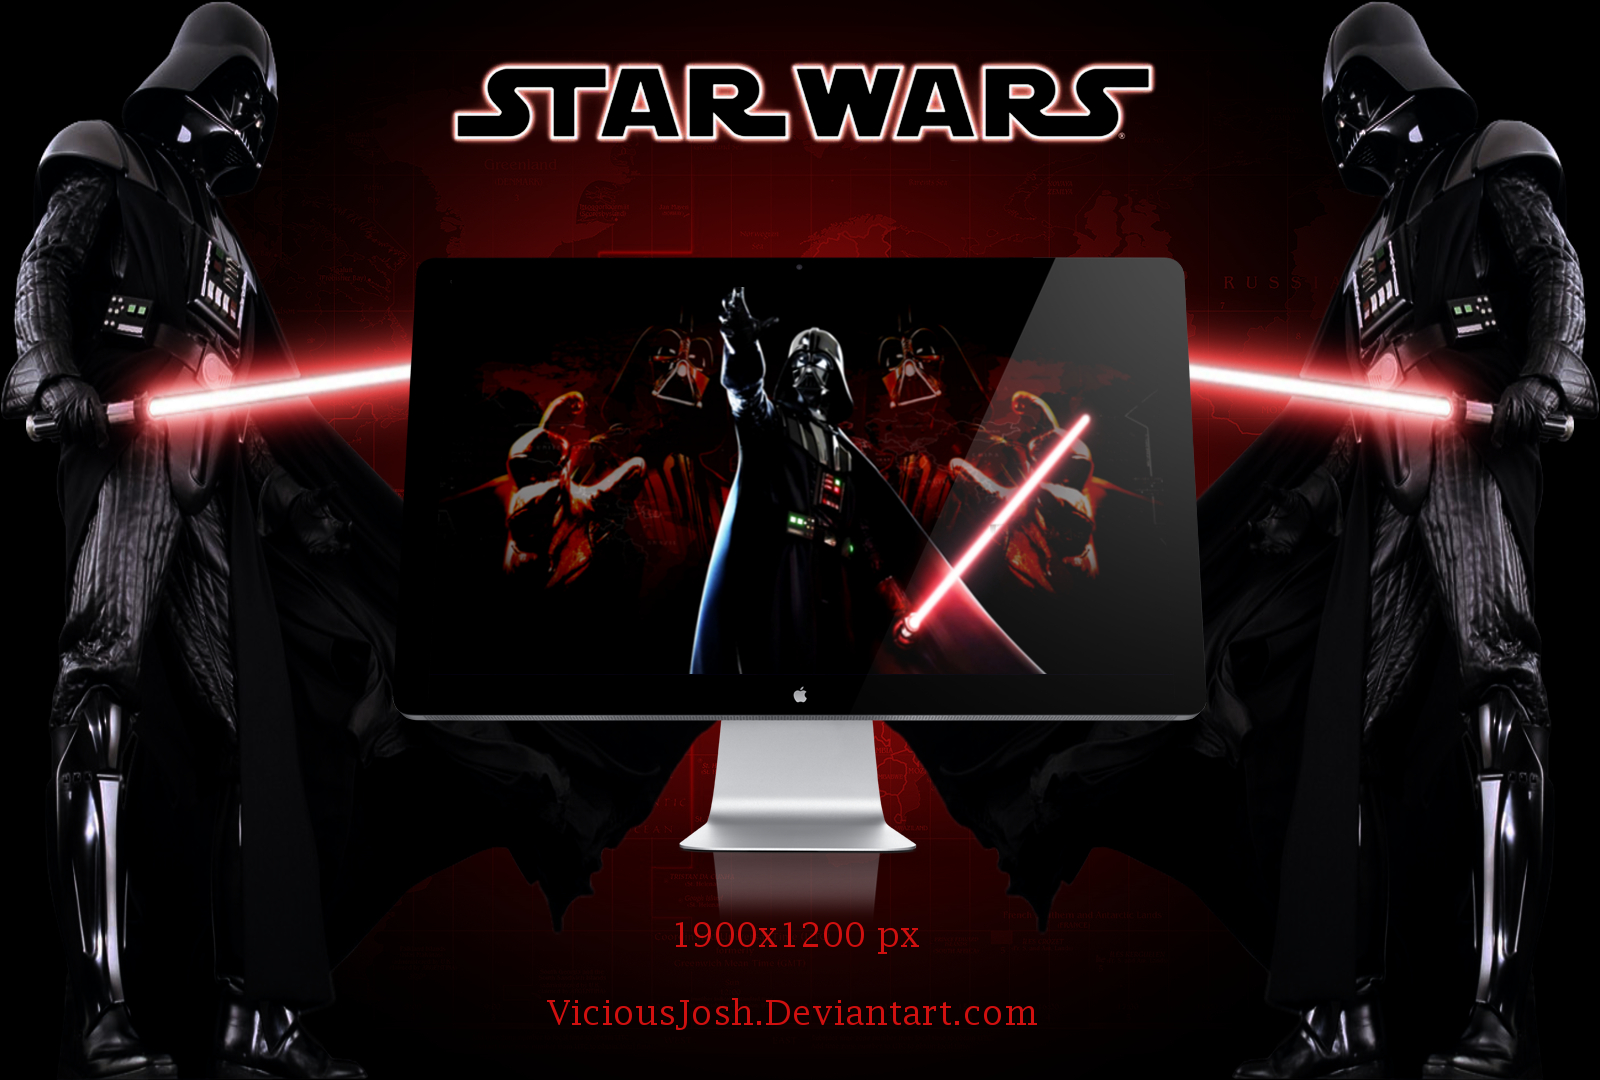 Star Wars Darth Vader Wallpaper By Viciousjosh